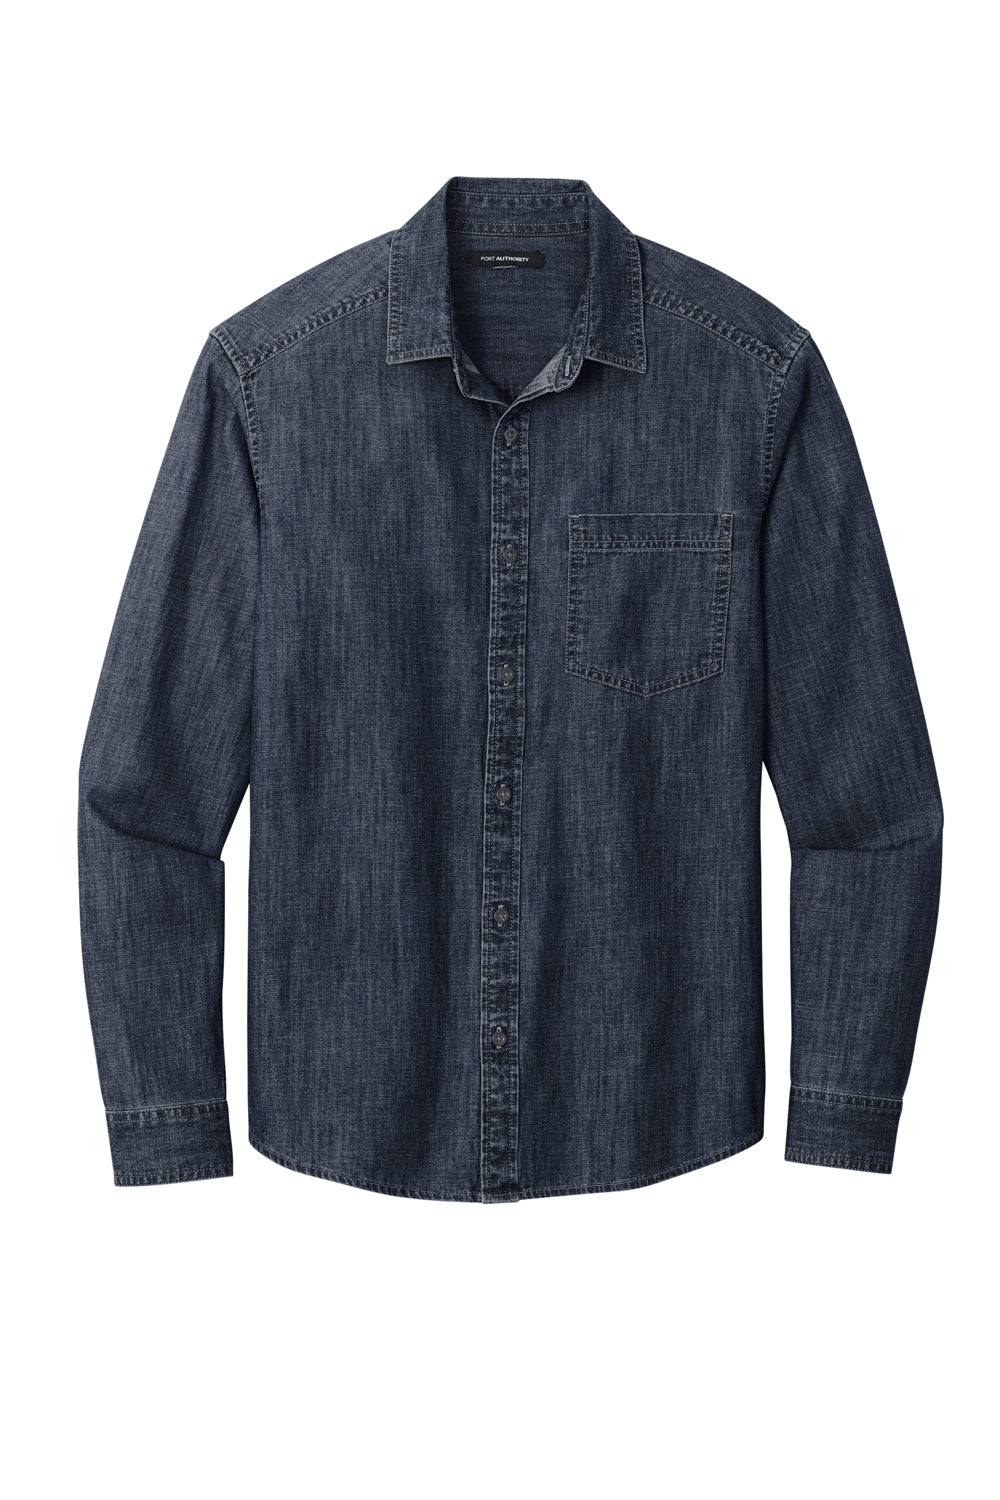 Port Authority W676 Perfect Denim Long Sleeve Button Down Shirt Dark Wash Flat Front